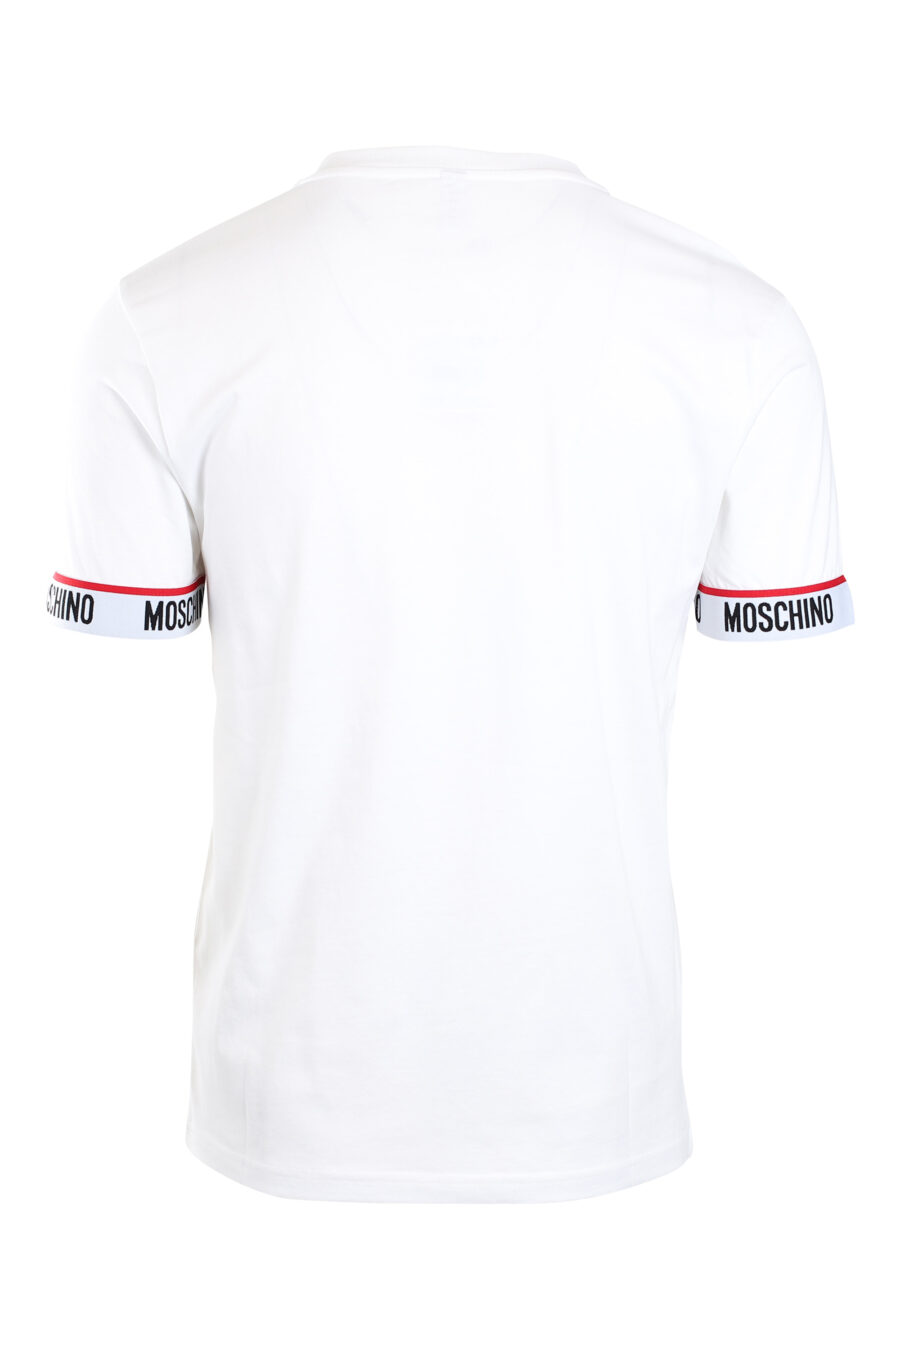 Camiseta blanca con logo en banda en mangas y minilogo monocromático - IMG 2173